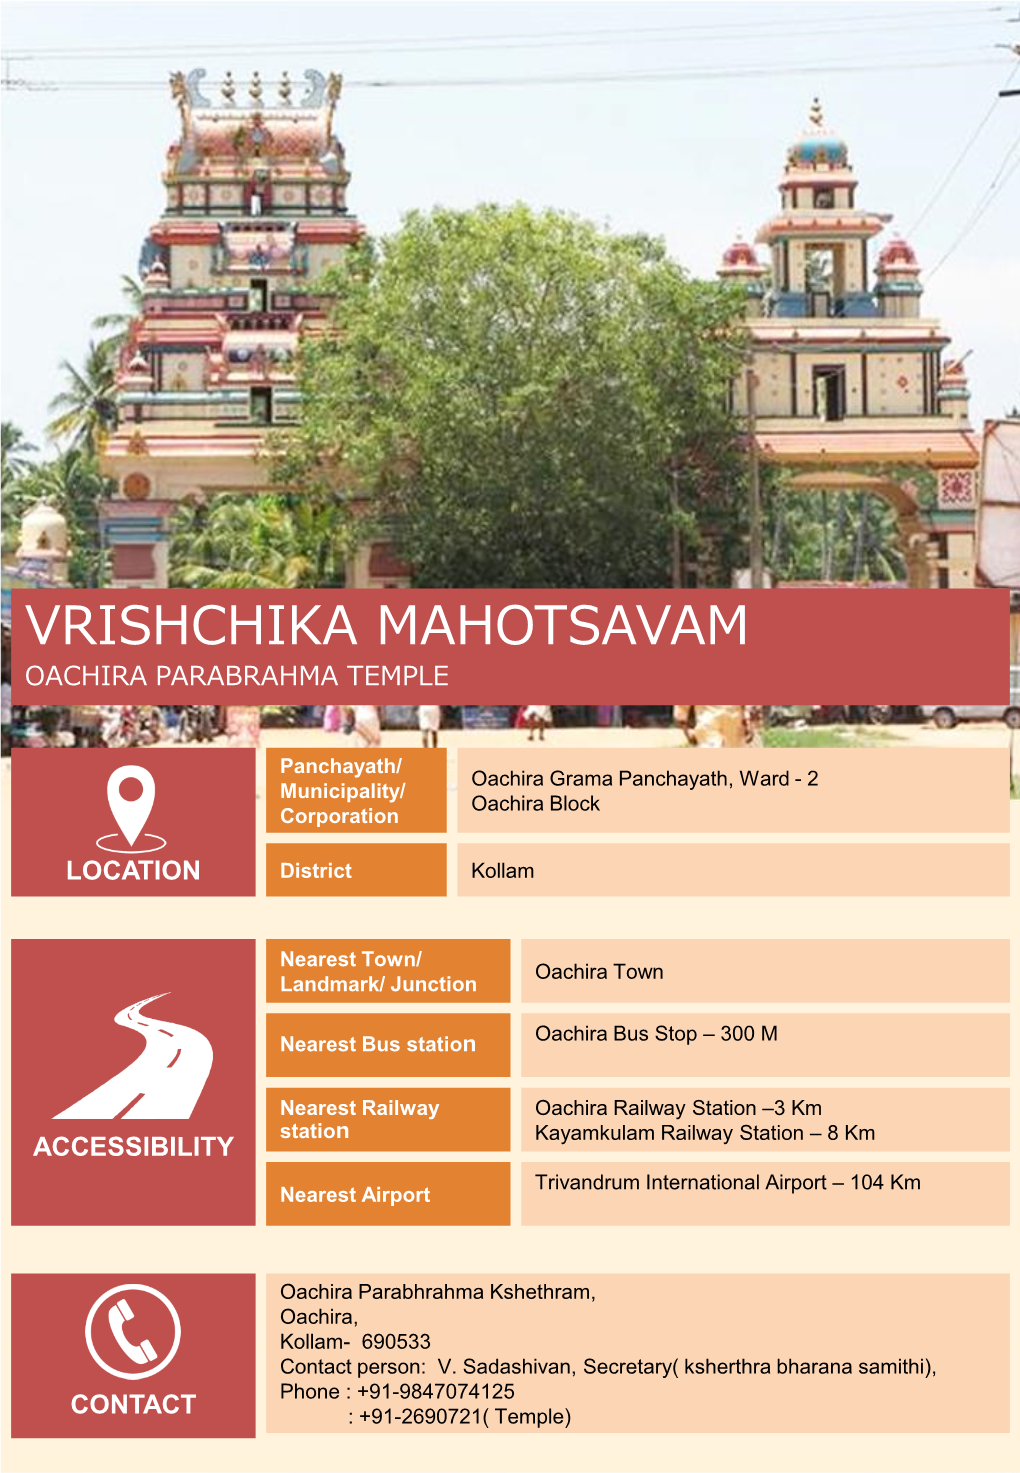 Vrishchika Mahotsavam Oachira Parabrahma Temple